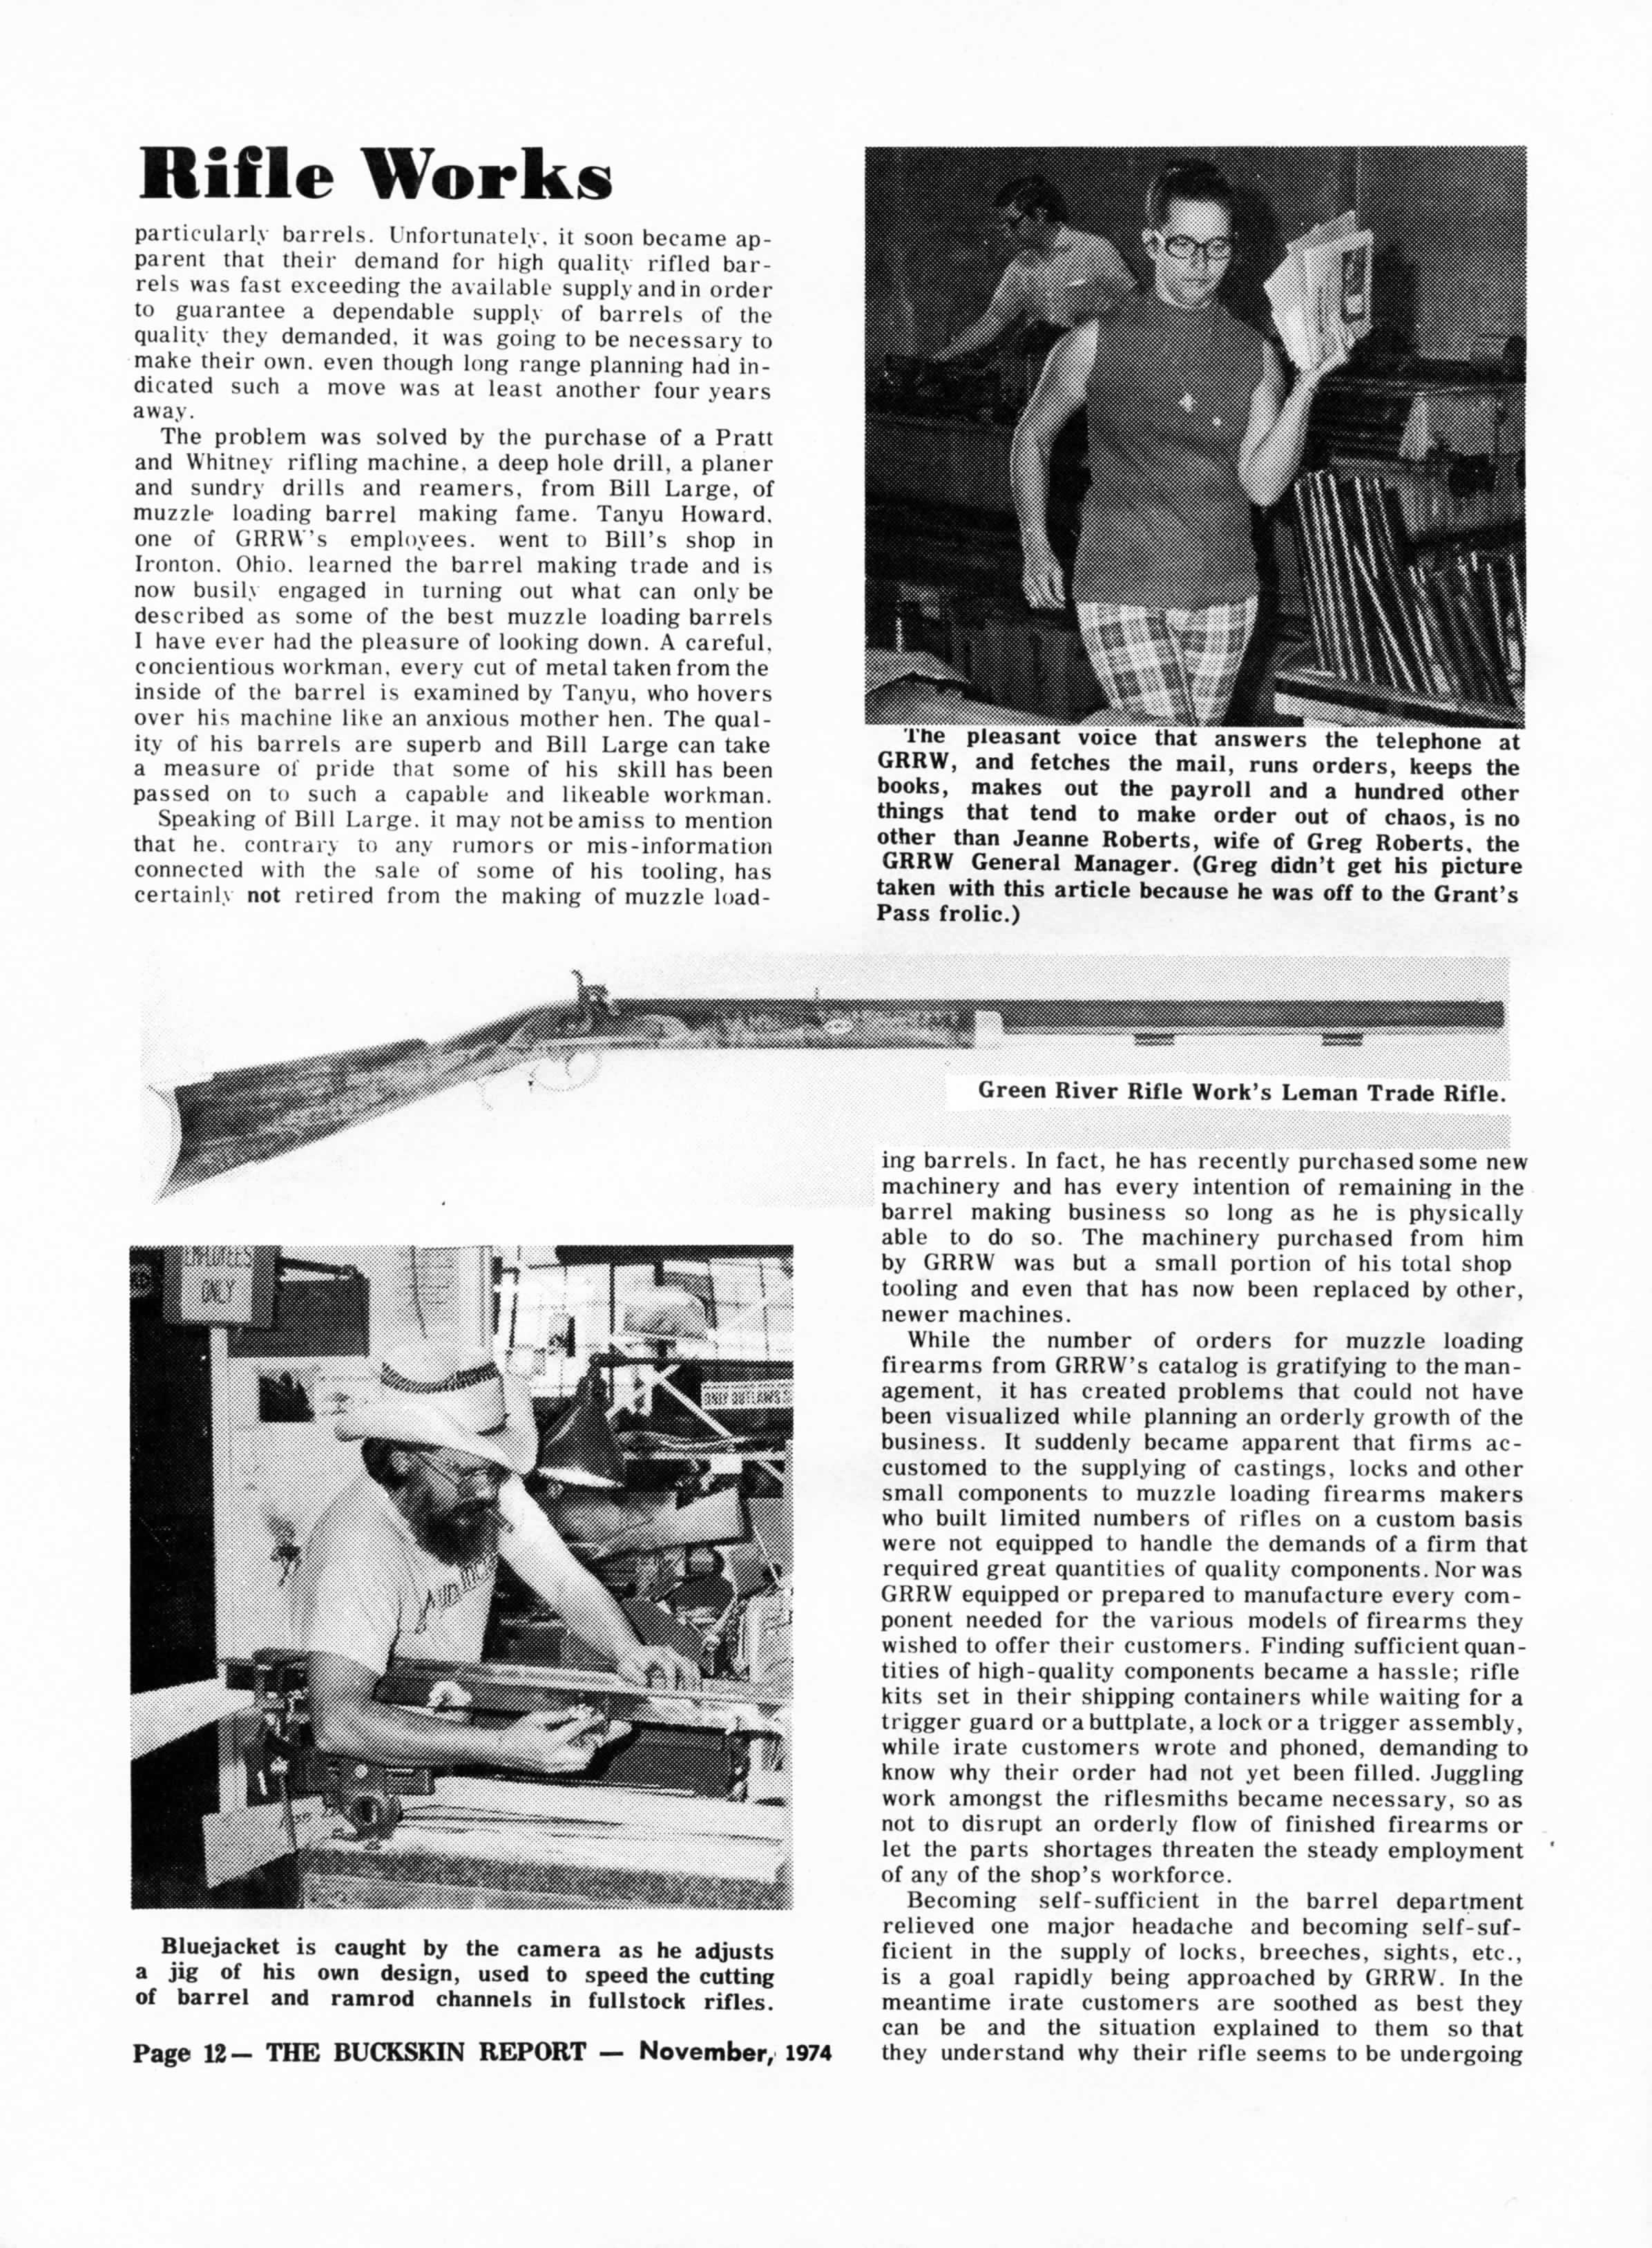 Nov 1974 Buckskin Report Article by John D. Baird about GRRW